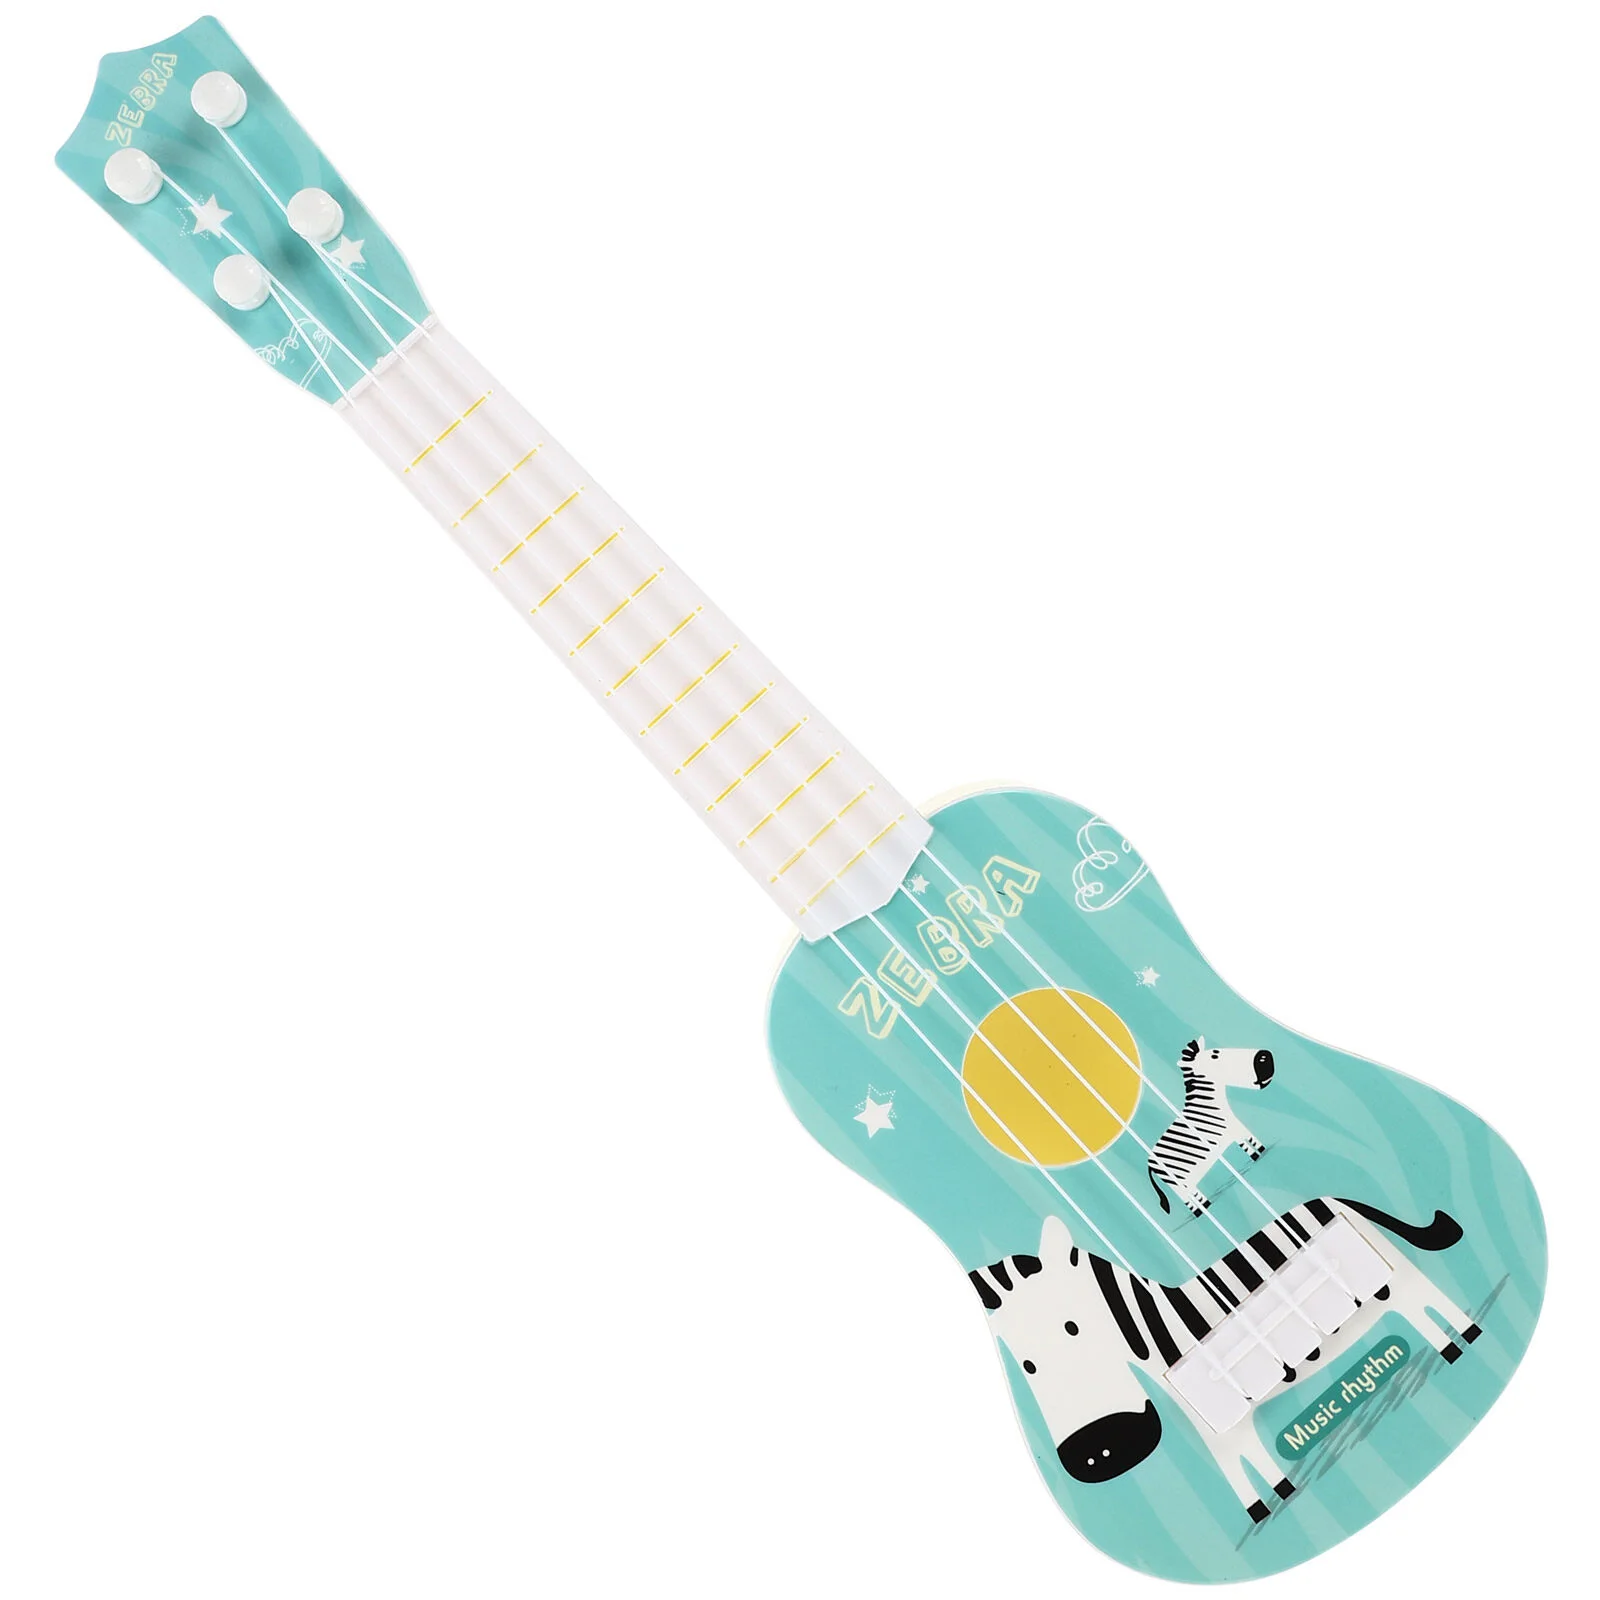 

Children's Ukulele Toddlers Toys Musical Instrument Plastic Animal Mini Guitar Plaything Beginner Imitation Playing